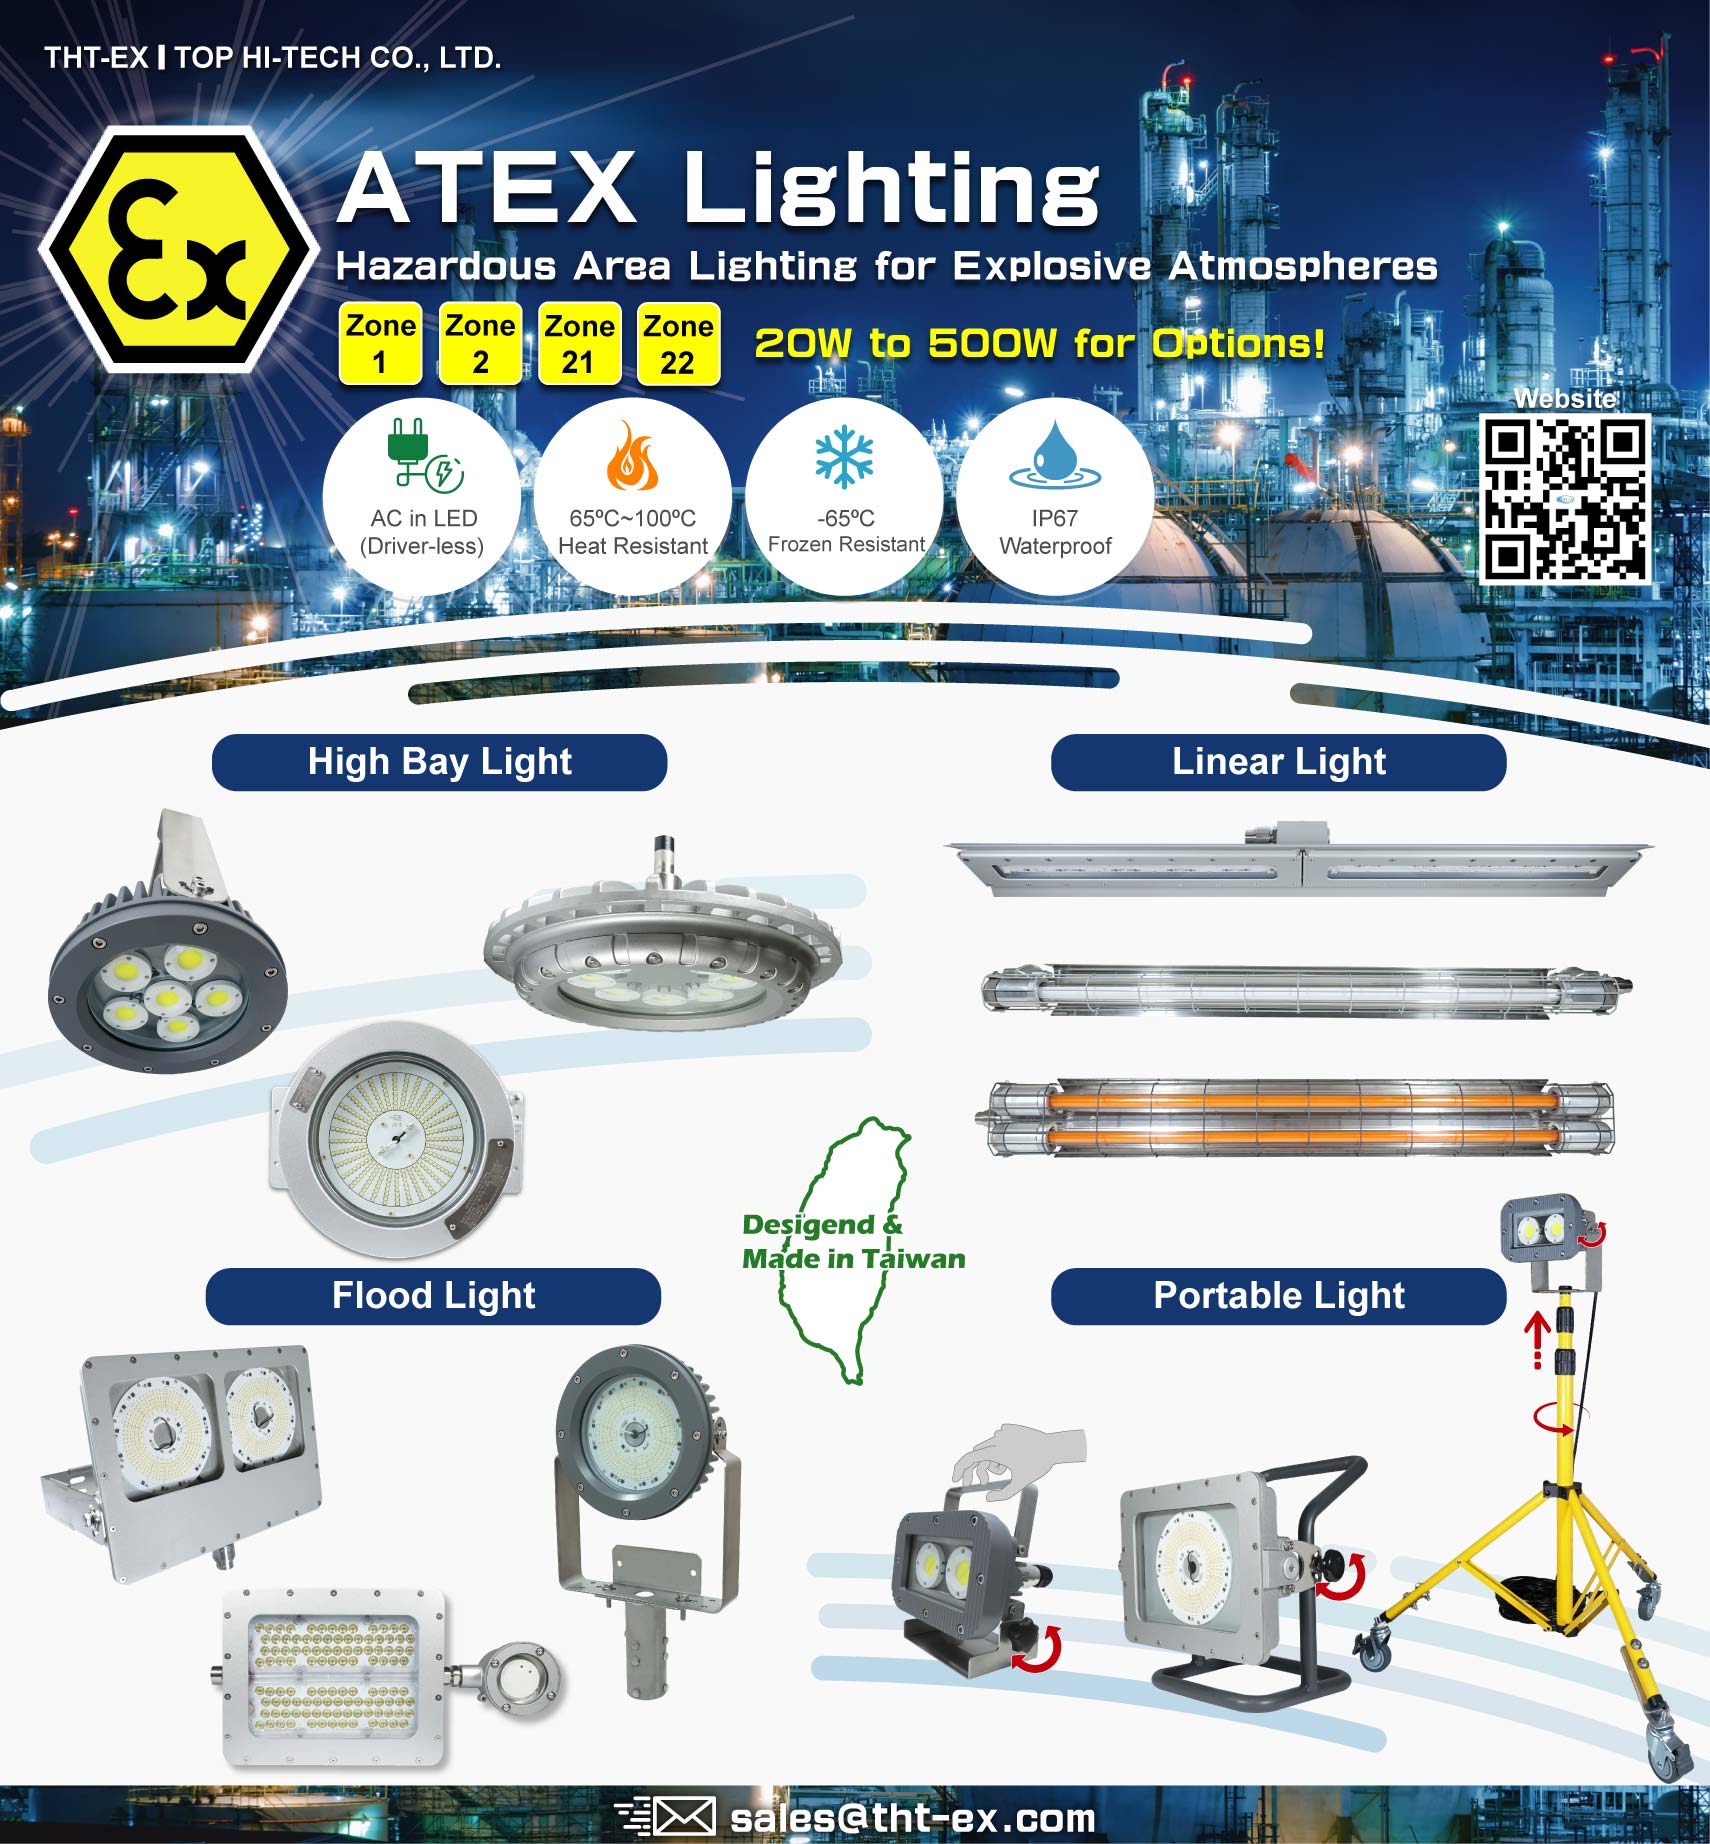  ATEX Lighting for Zone 1, Zone 2, Zone 21, Zone 22 Hazardous Areas